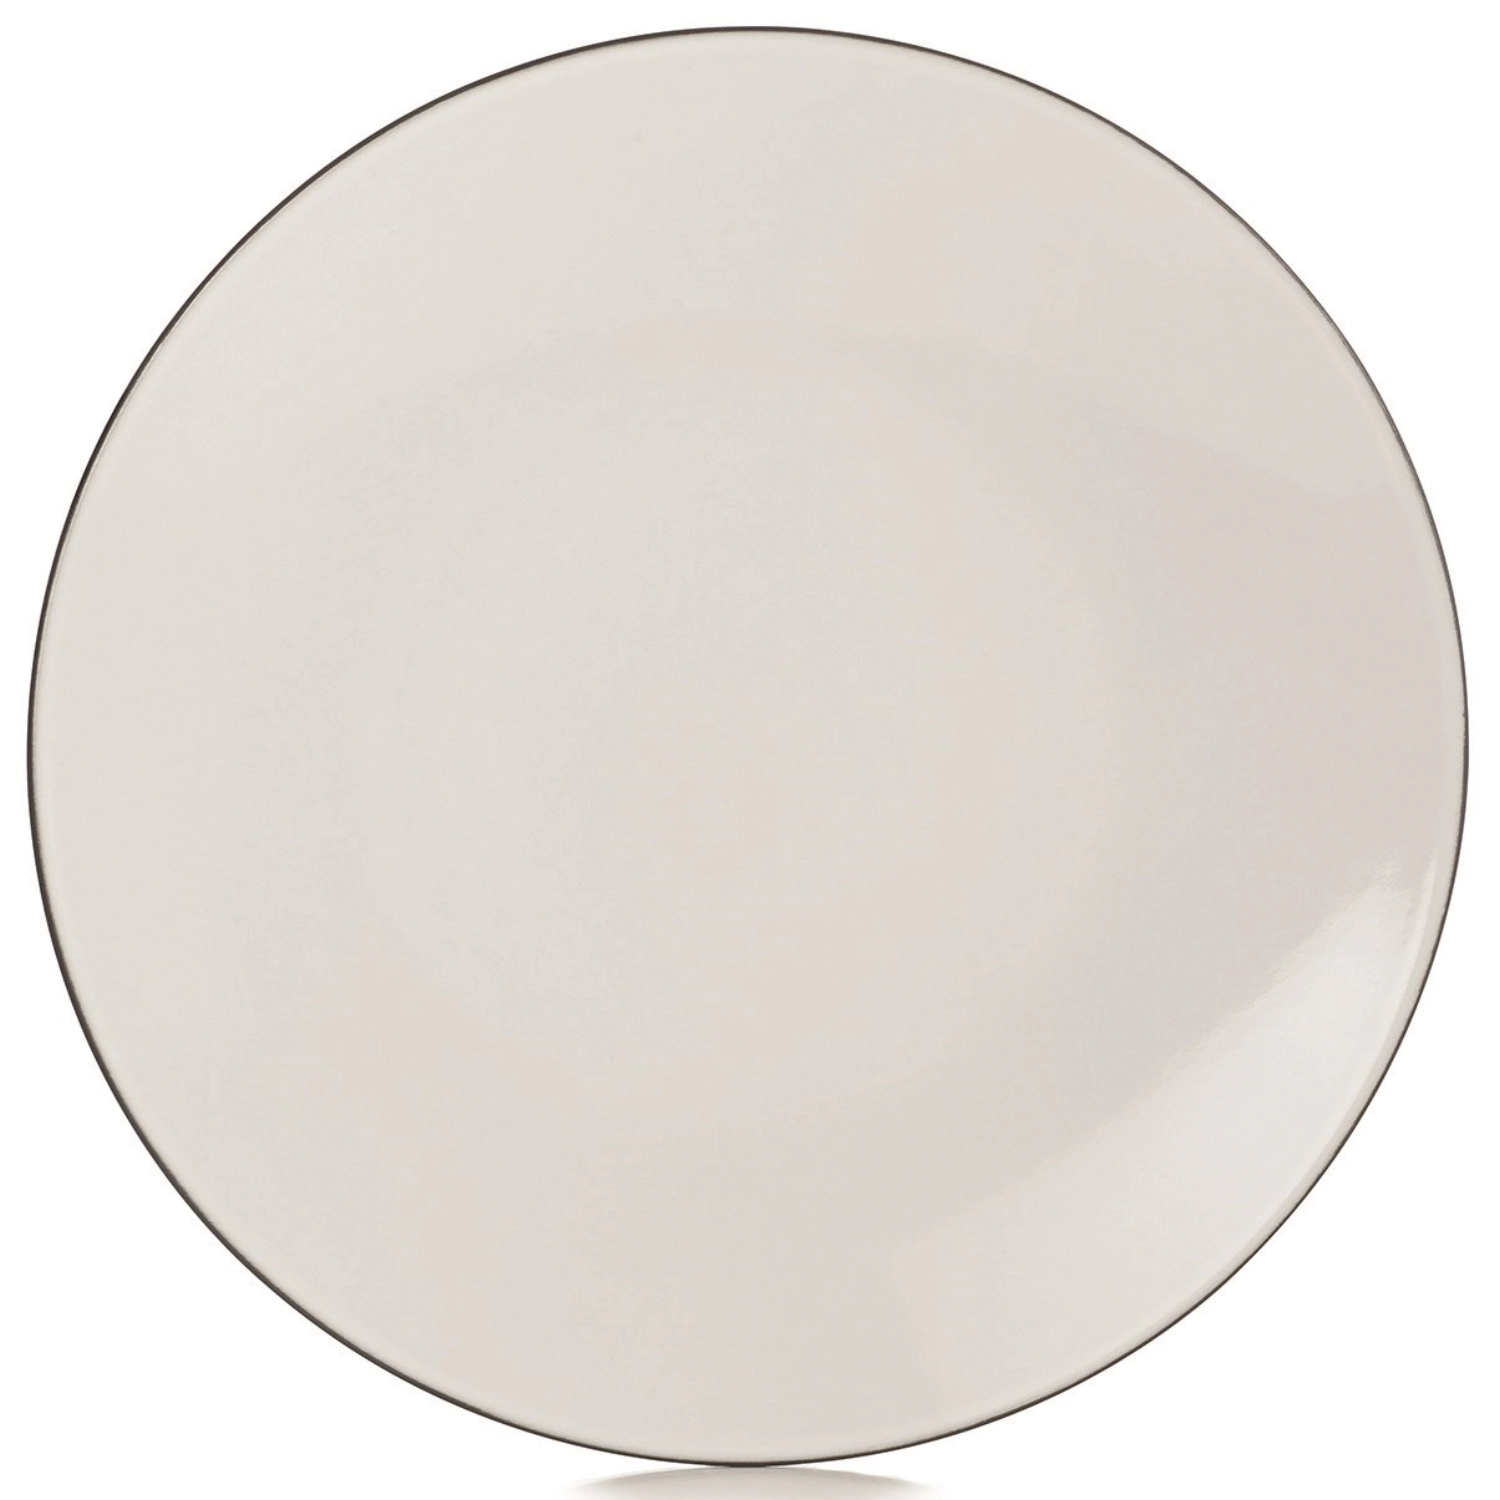 Equinoxe assiette plate, ø 28, h : 3.3 cm, blanc